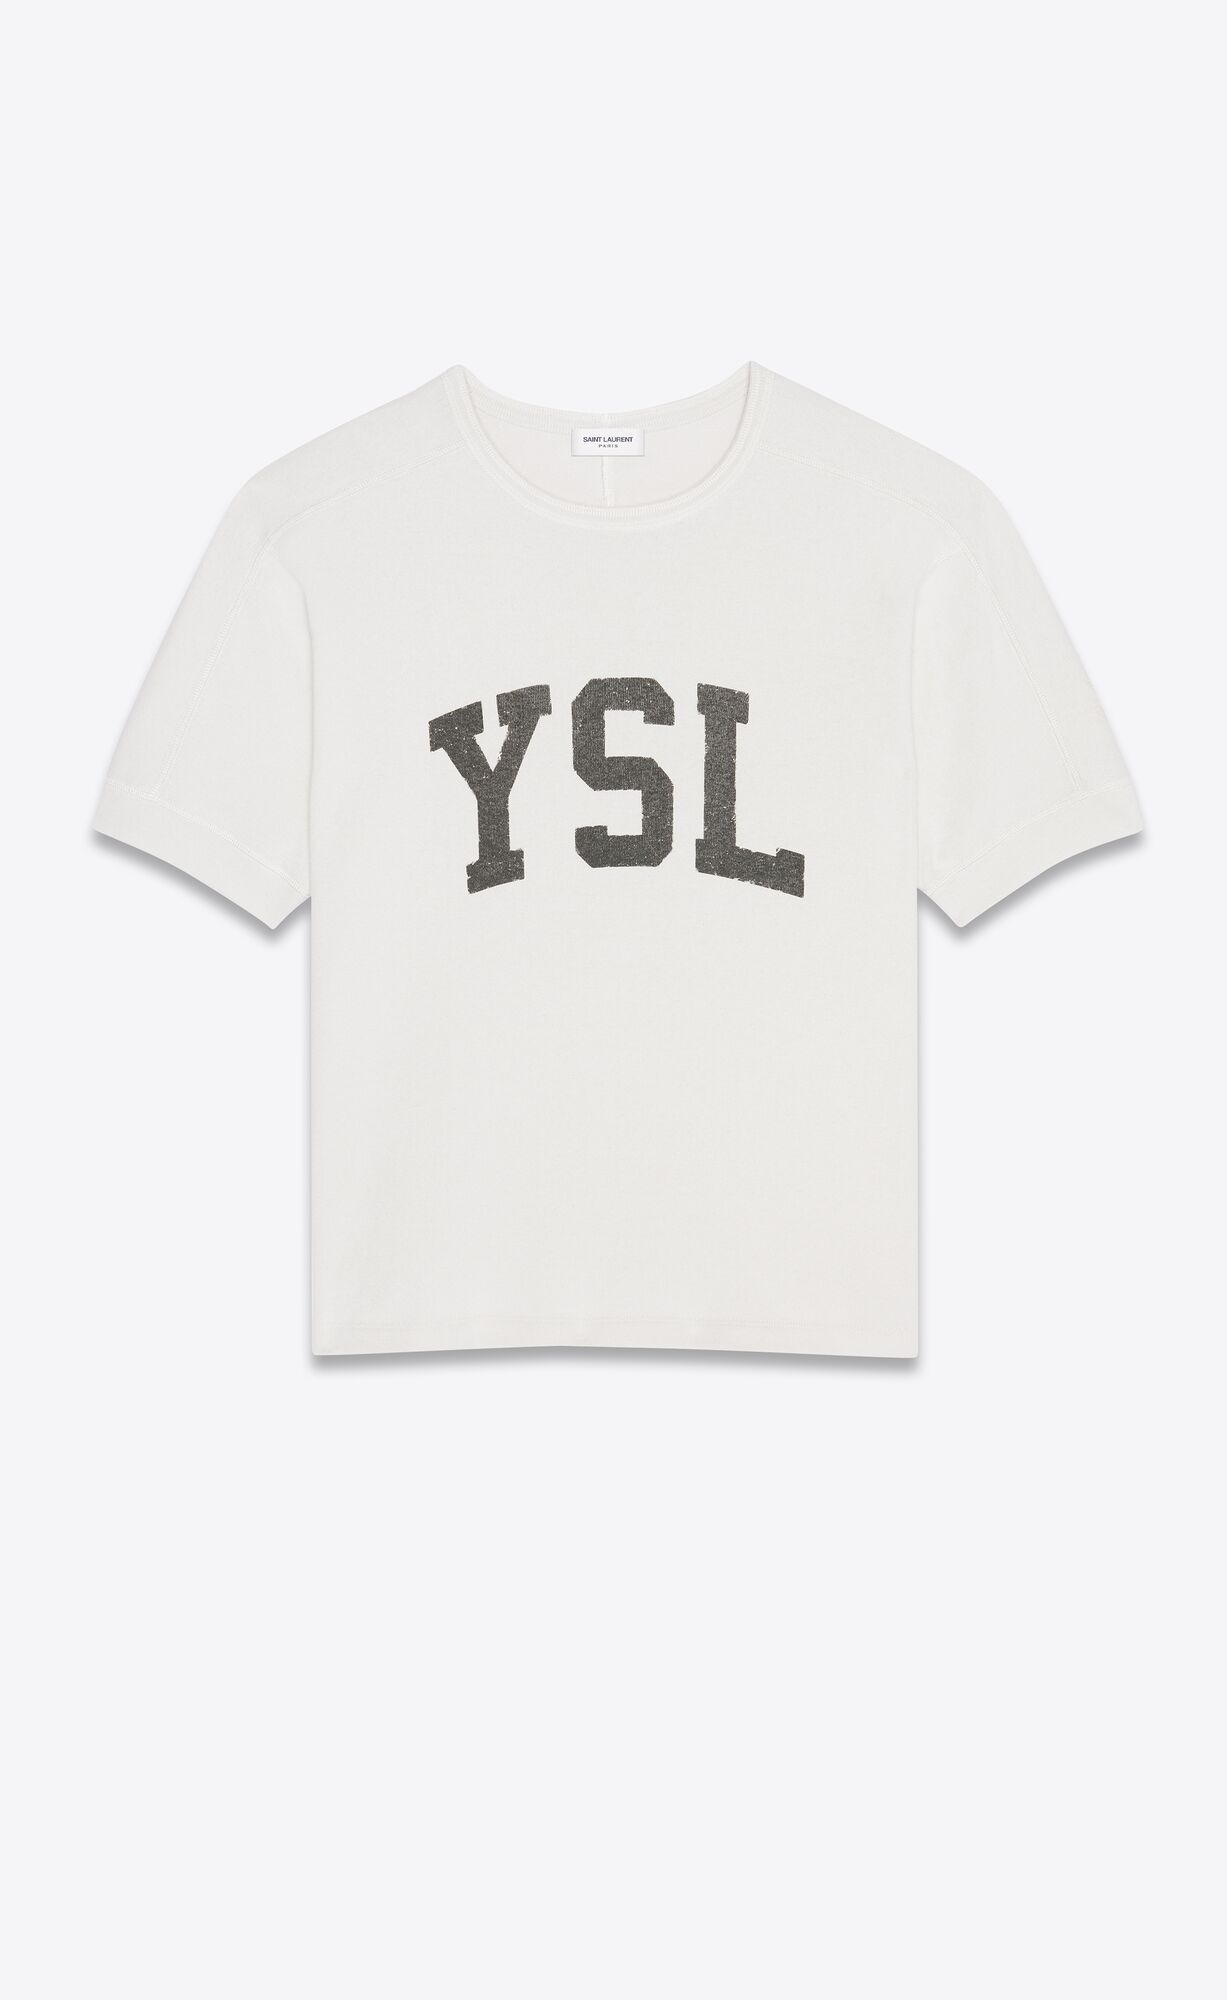 ysl vintage t-shirt | Saint Laurent Inc. (Global)